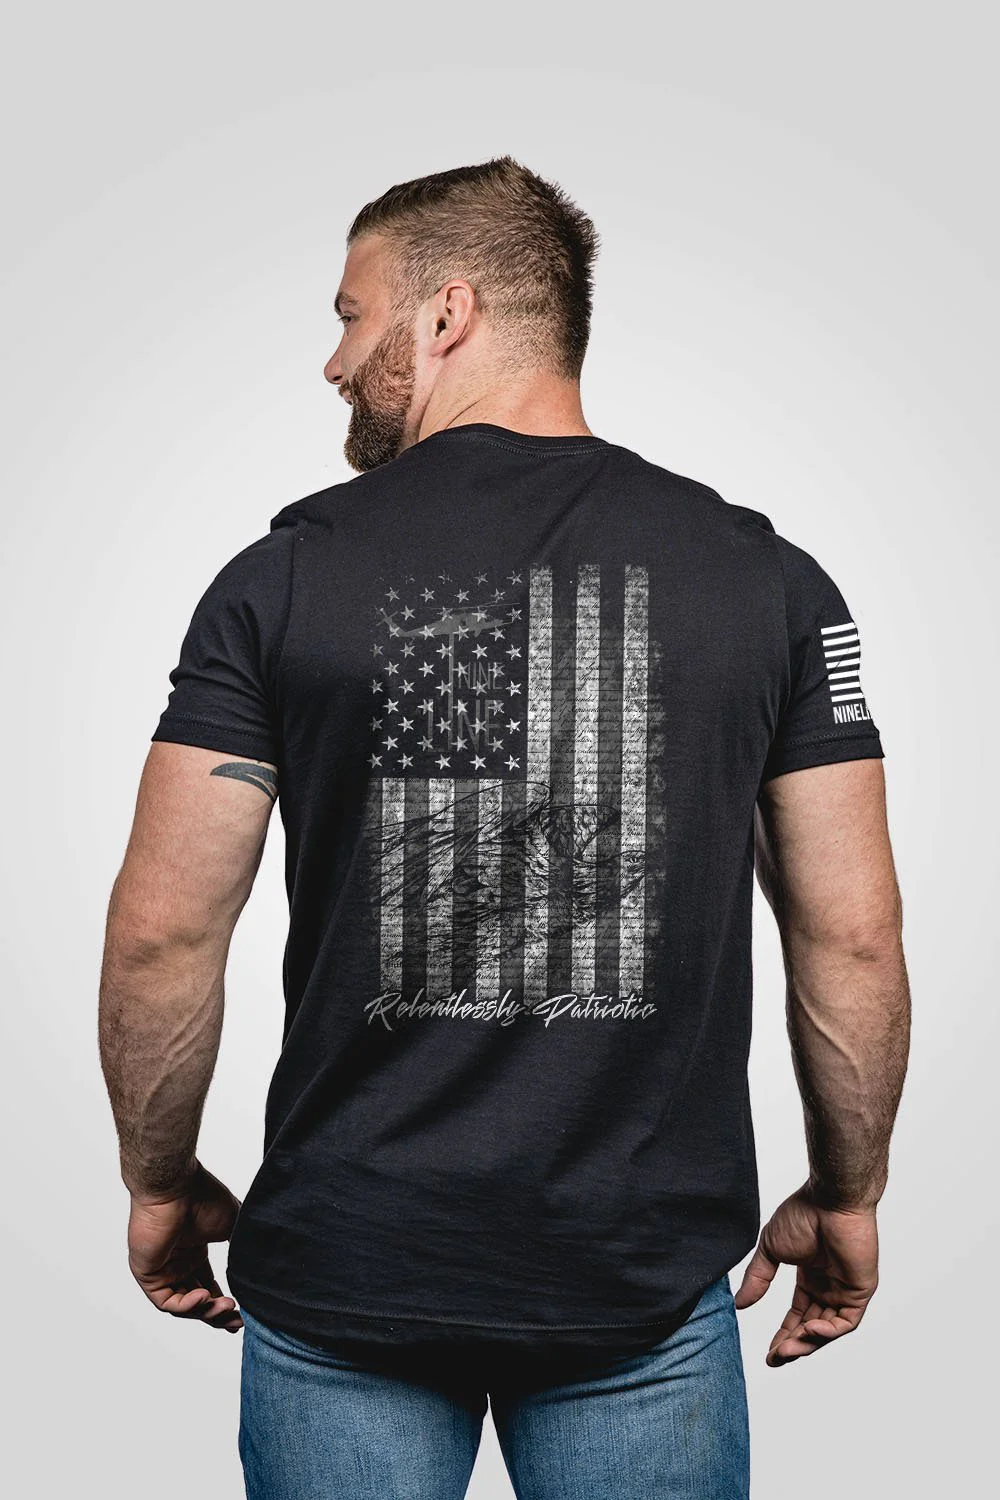 Nine Line Men's American Drop Line T-Shirt posted by ProdOrigin USA in Men's Apparel